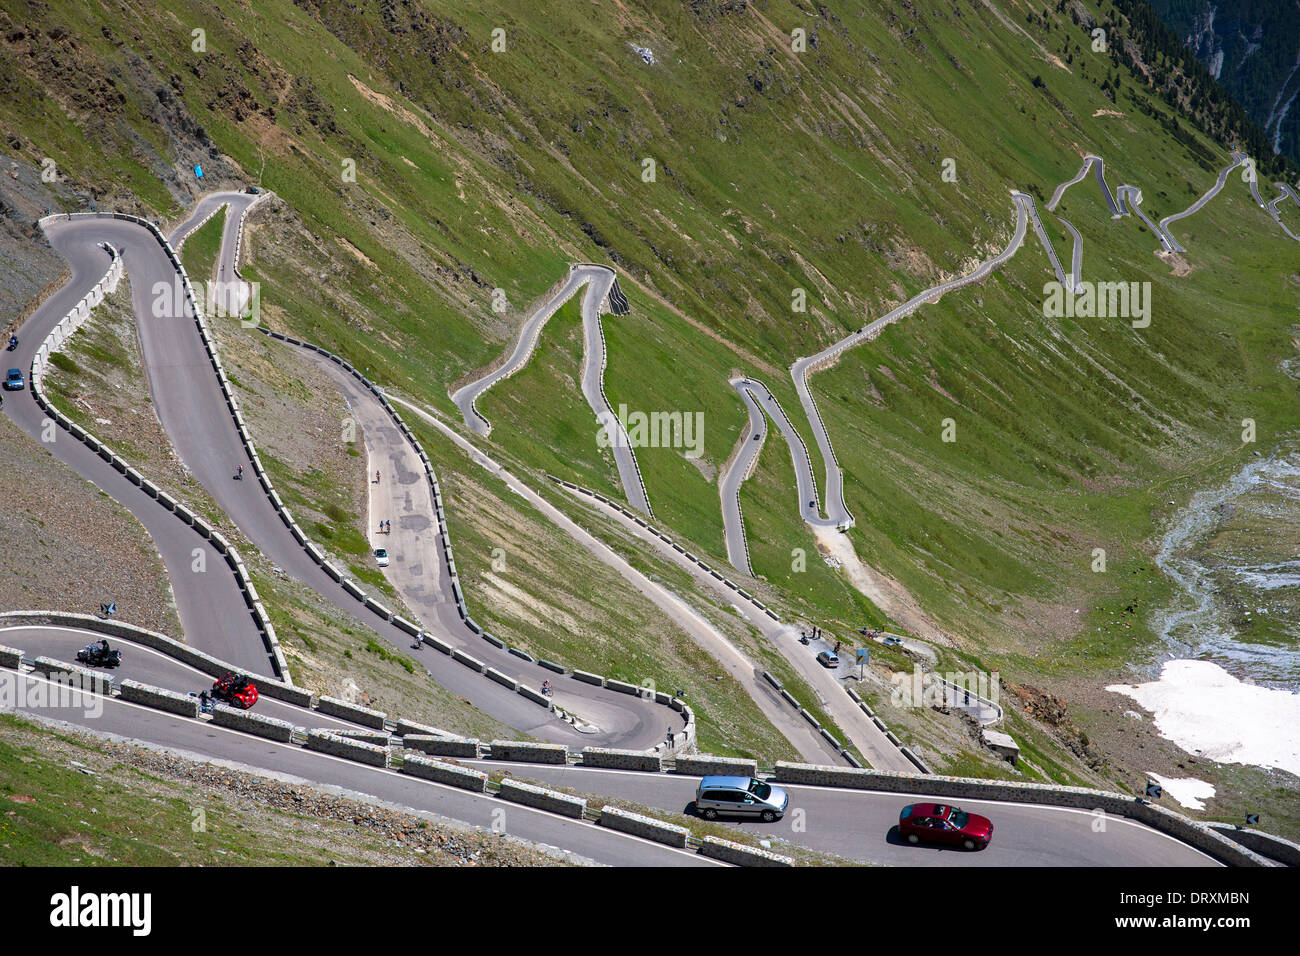 Cars on The Stelvio Pass, Passo dello Stelvio, Stilfser Joch, on the route to Bormio, in the Eastern Alps in Northern Italy Stock Photo